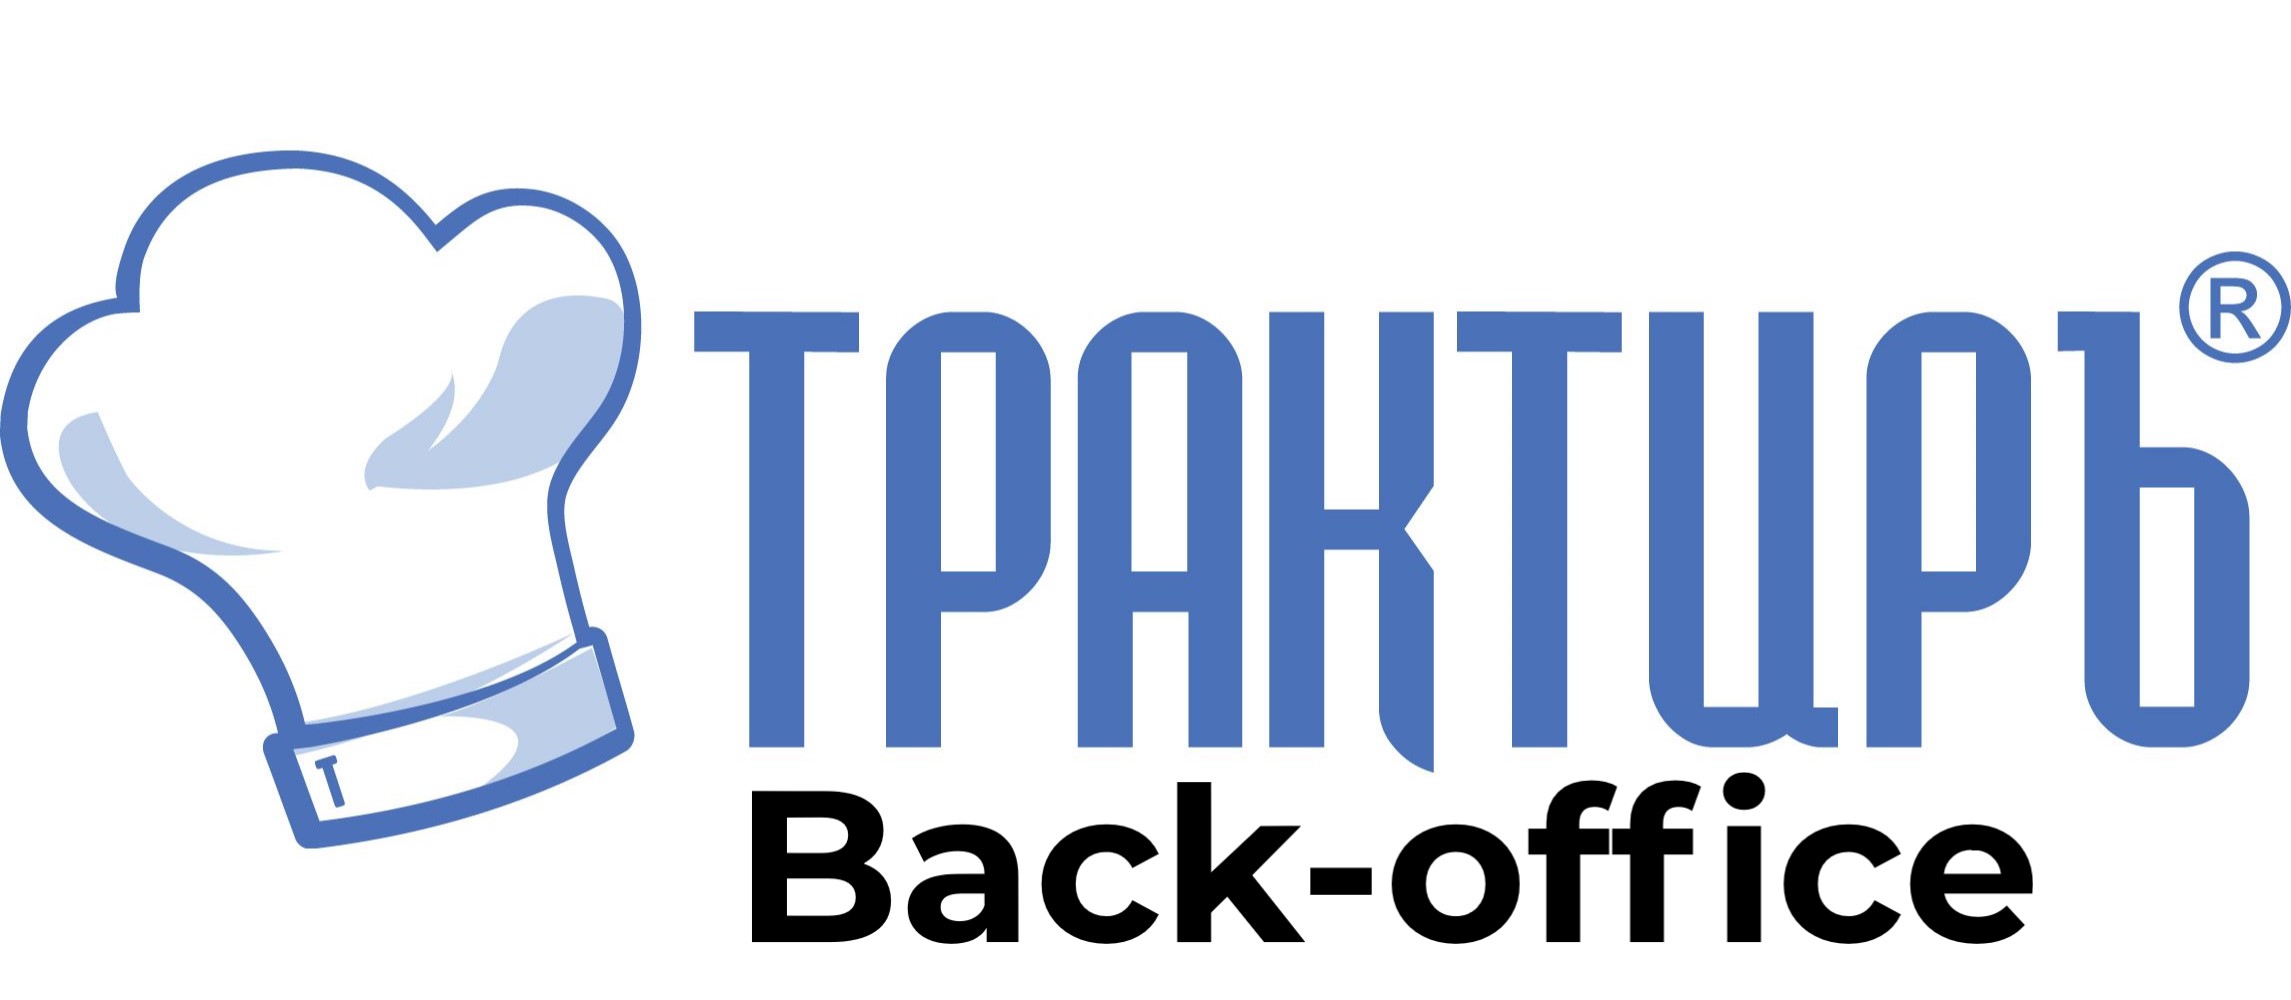 Трактиръ Back-Office ПРОФ, ред. 3.0 Основная поставка в Братске